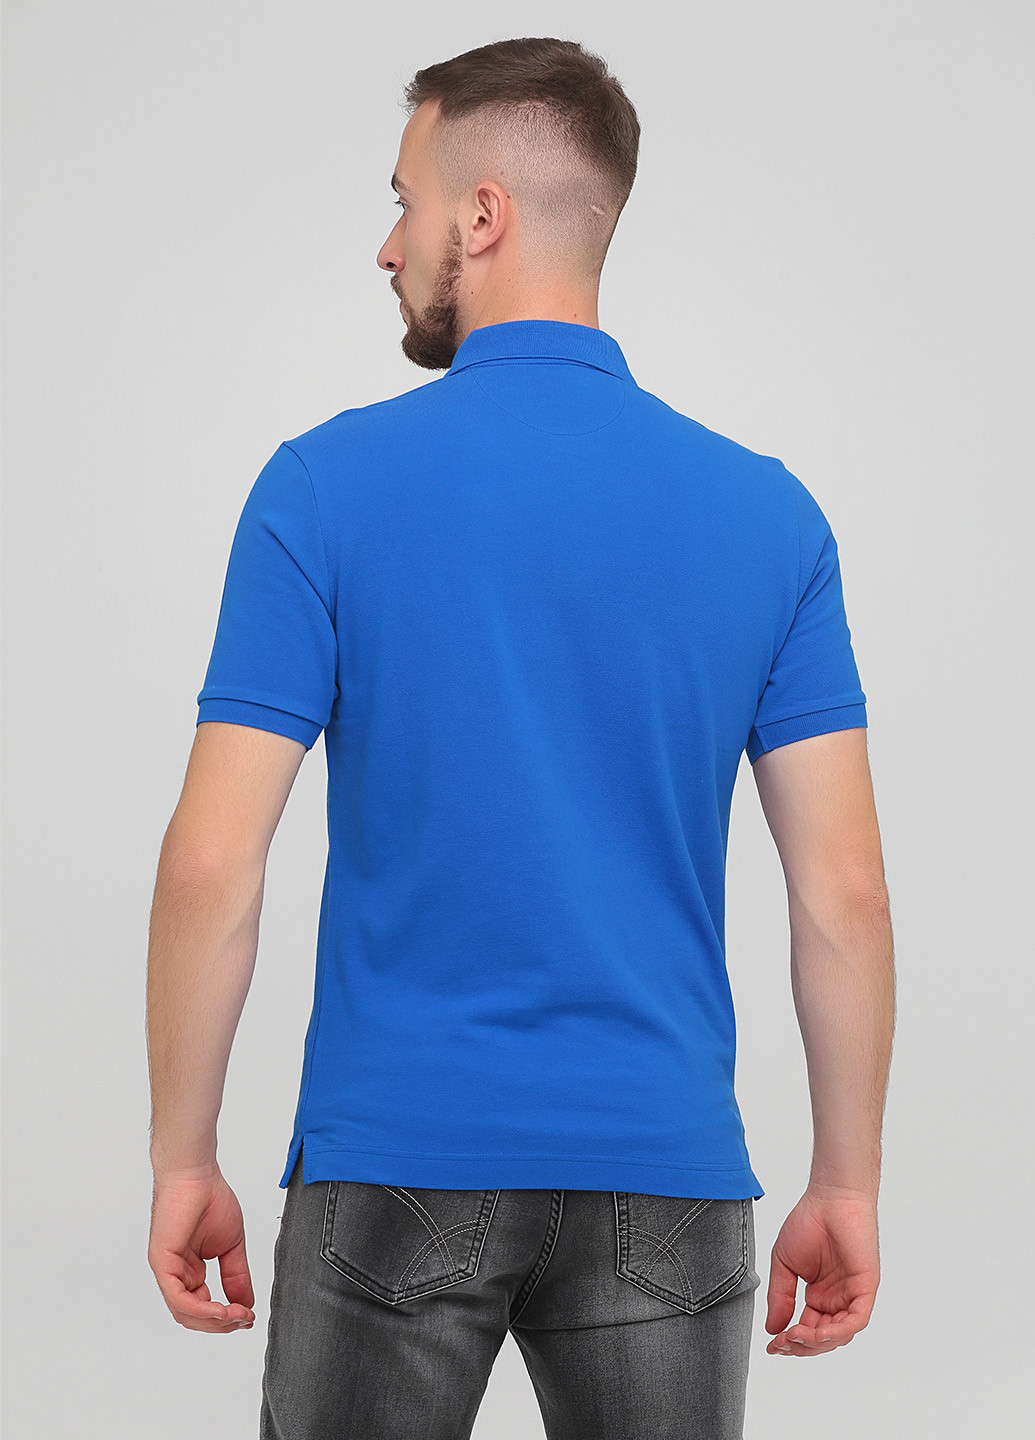 Синяя футболка-поло для мужчин La Martina однотонная